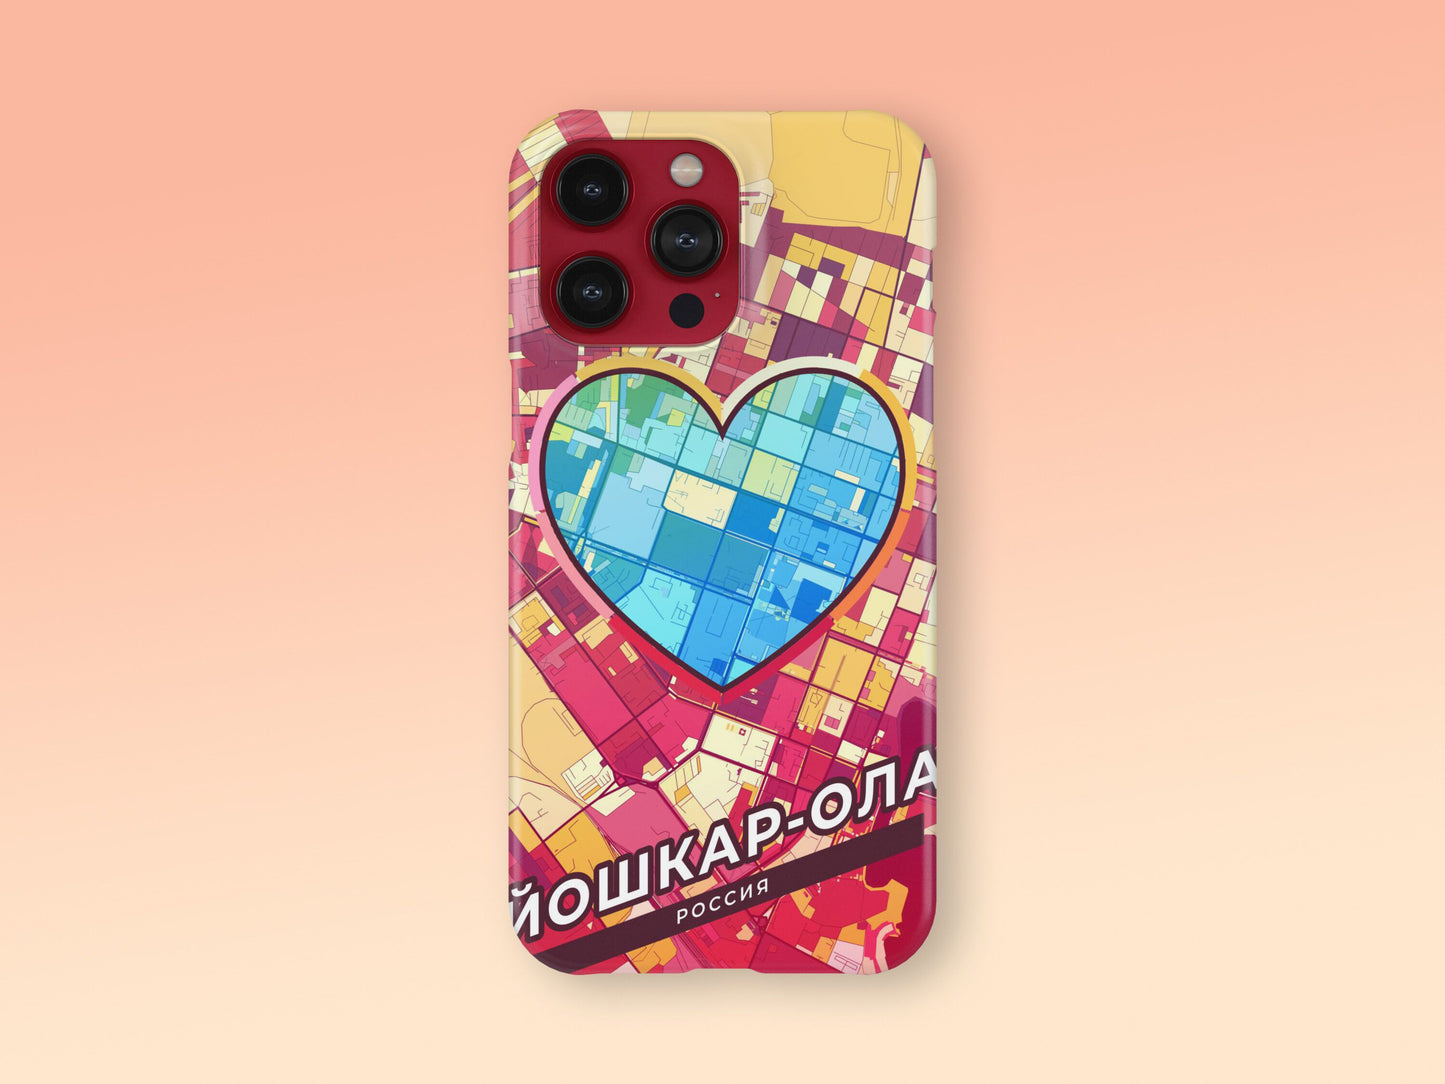 Yoshkar-Ola Russia slim phone case with colorful icon 2